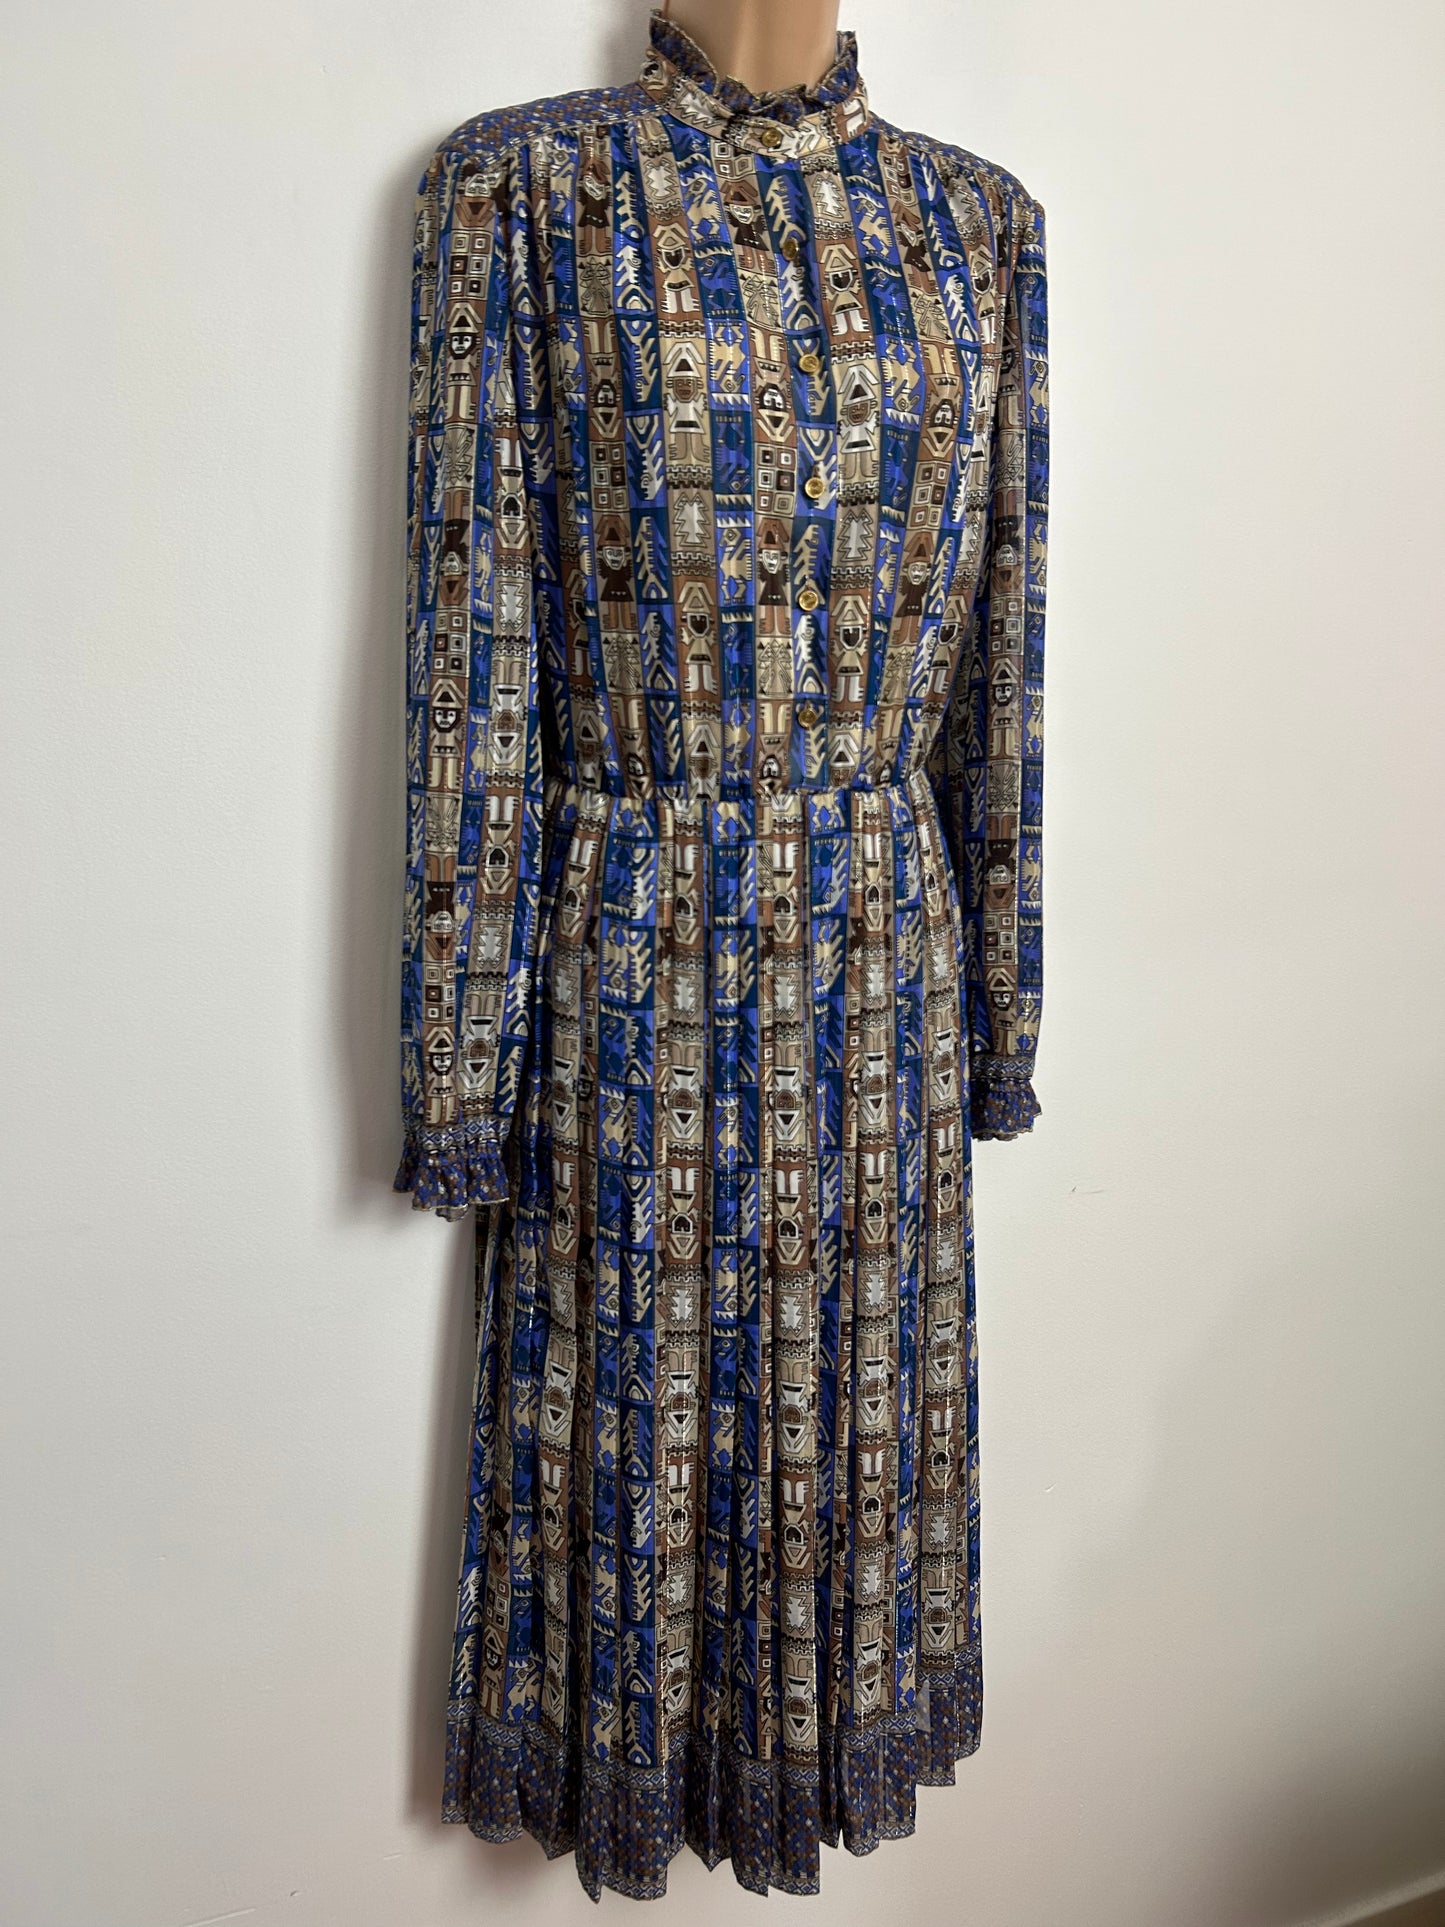 Vintage 1980s FINK MODELL UK Size 14 Blue Brown & Beige Aztec Print Long Sleeve Pleated Midi Day Dress